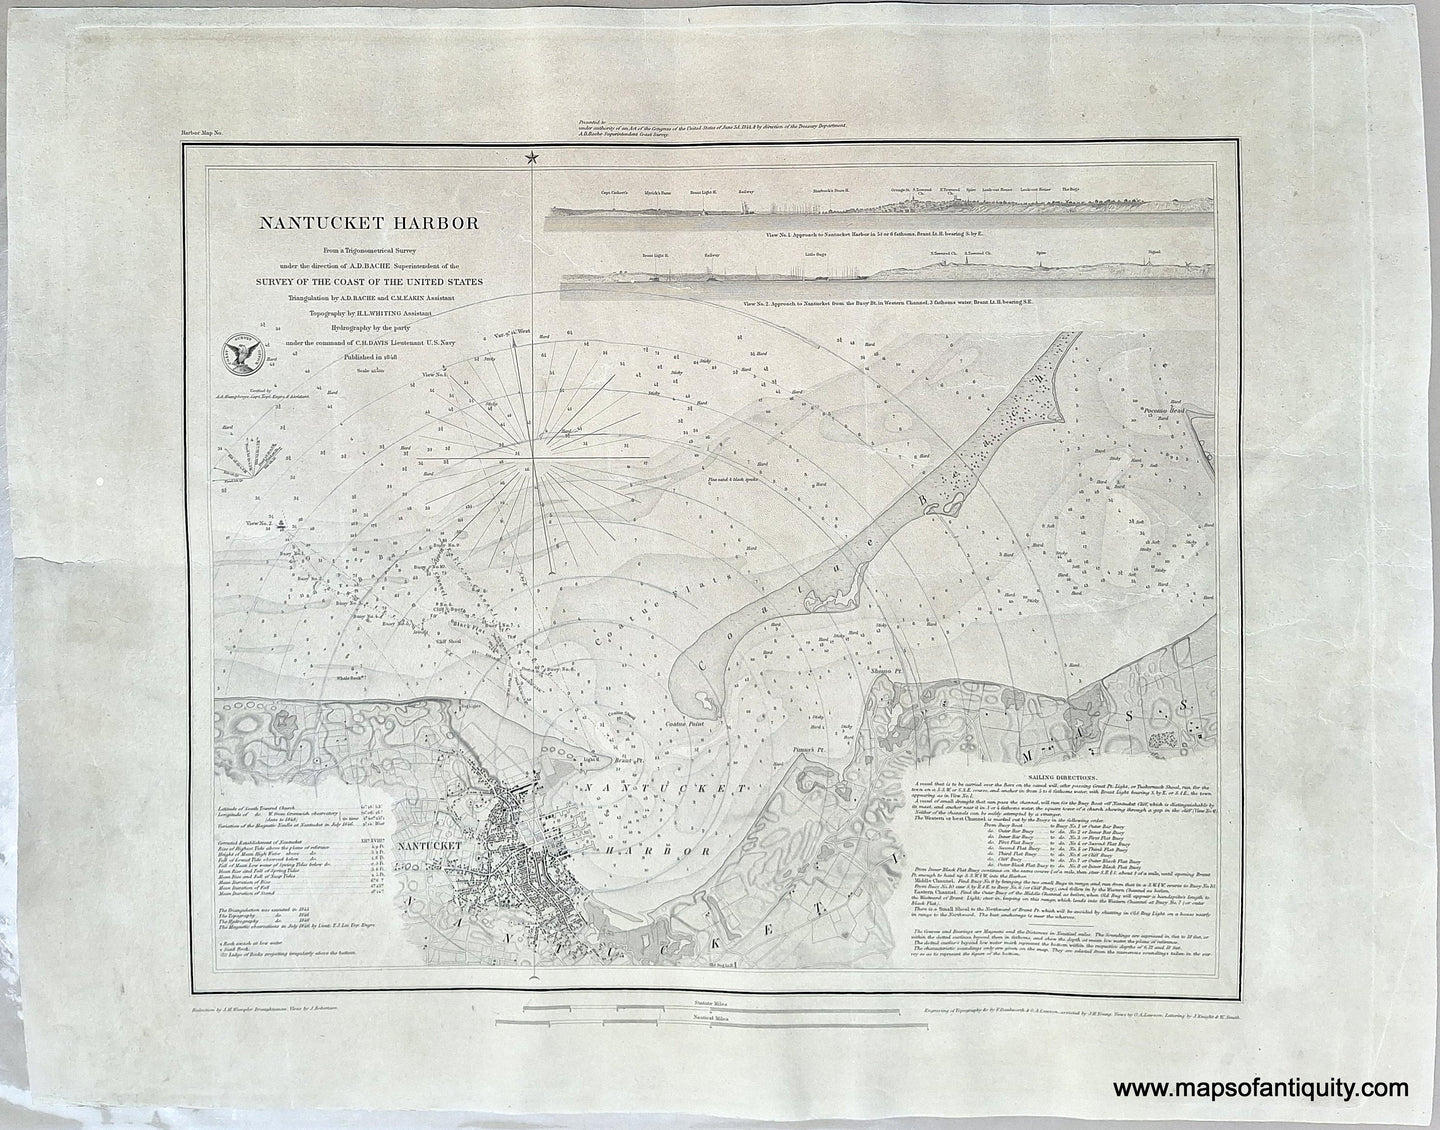 Antique-Nautical-Chart-Nantucket-Harbor-Massachusetts-Sailing-Map-Cape-Cod-and-Islands-1848-U.S.-Coast-and-Geodetic-Survey-Maps-Of-Antiquity